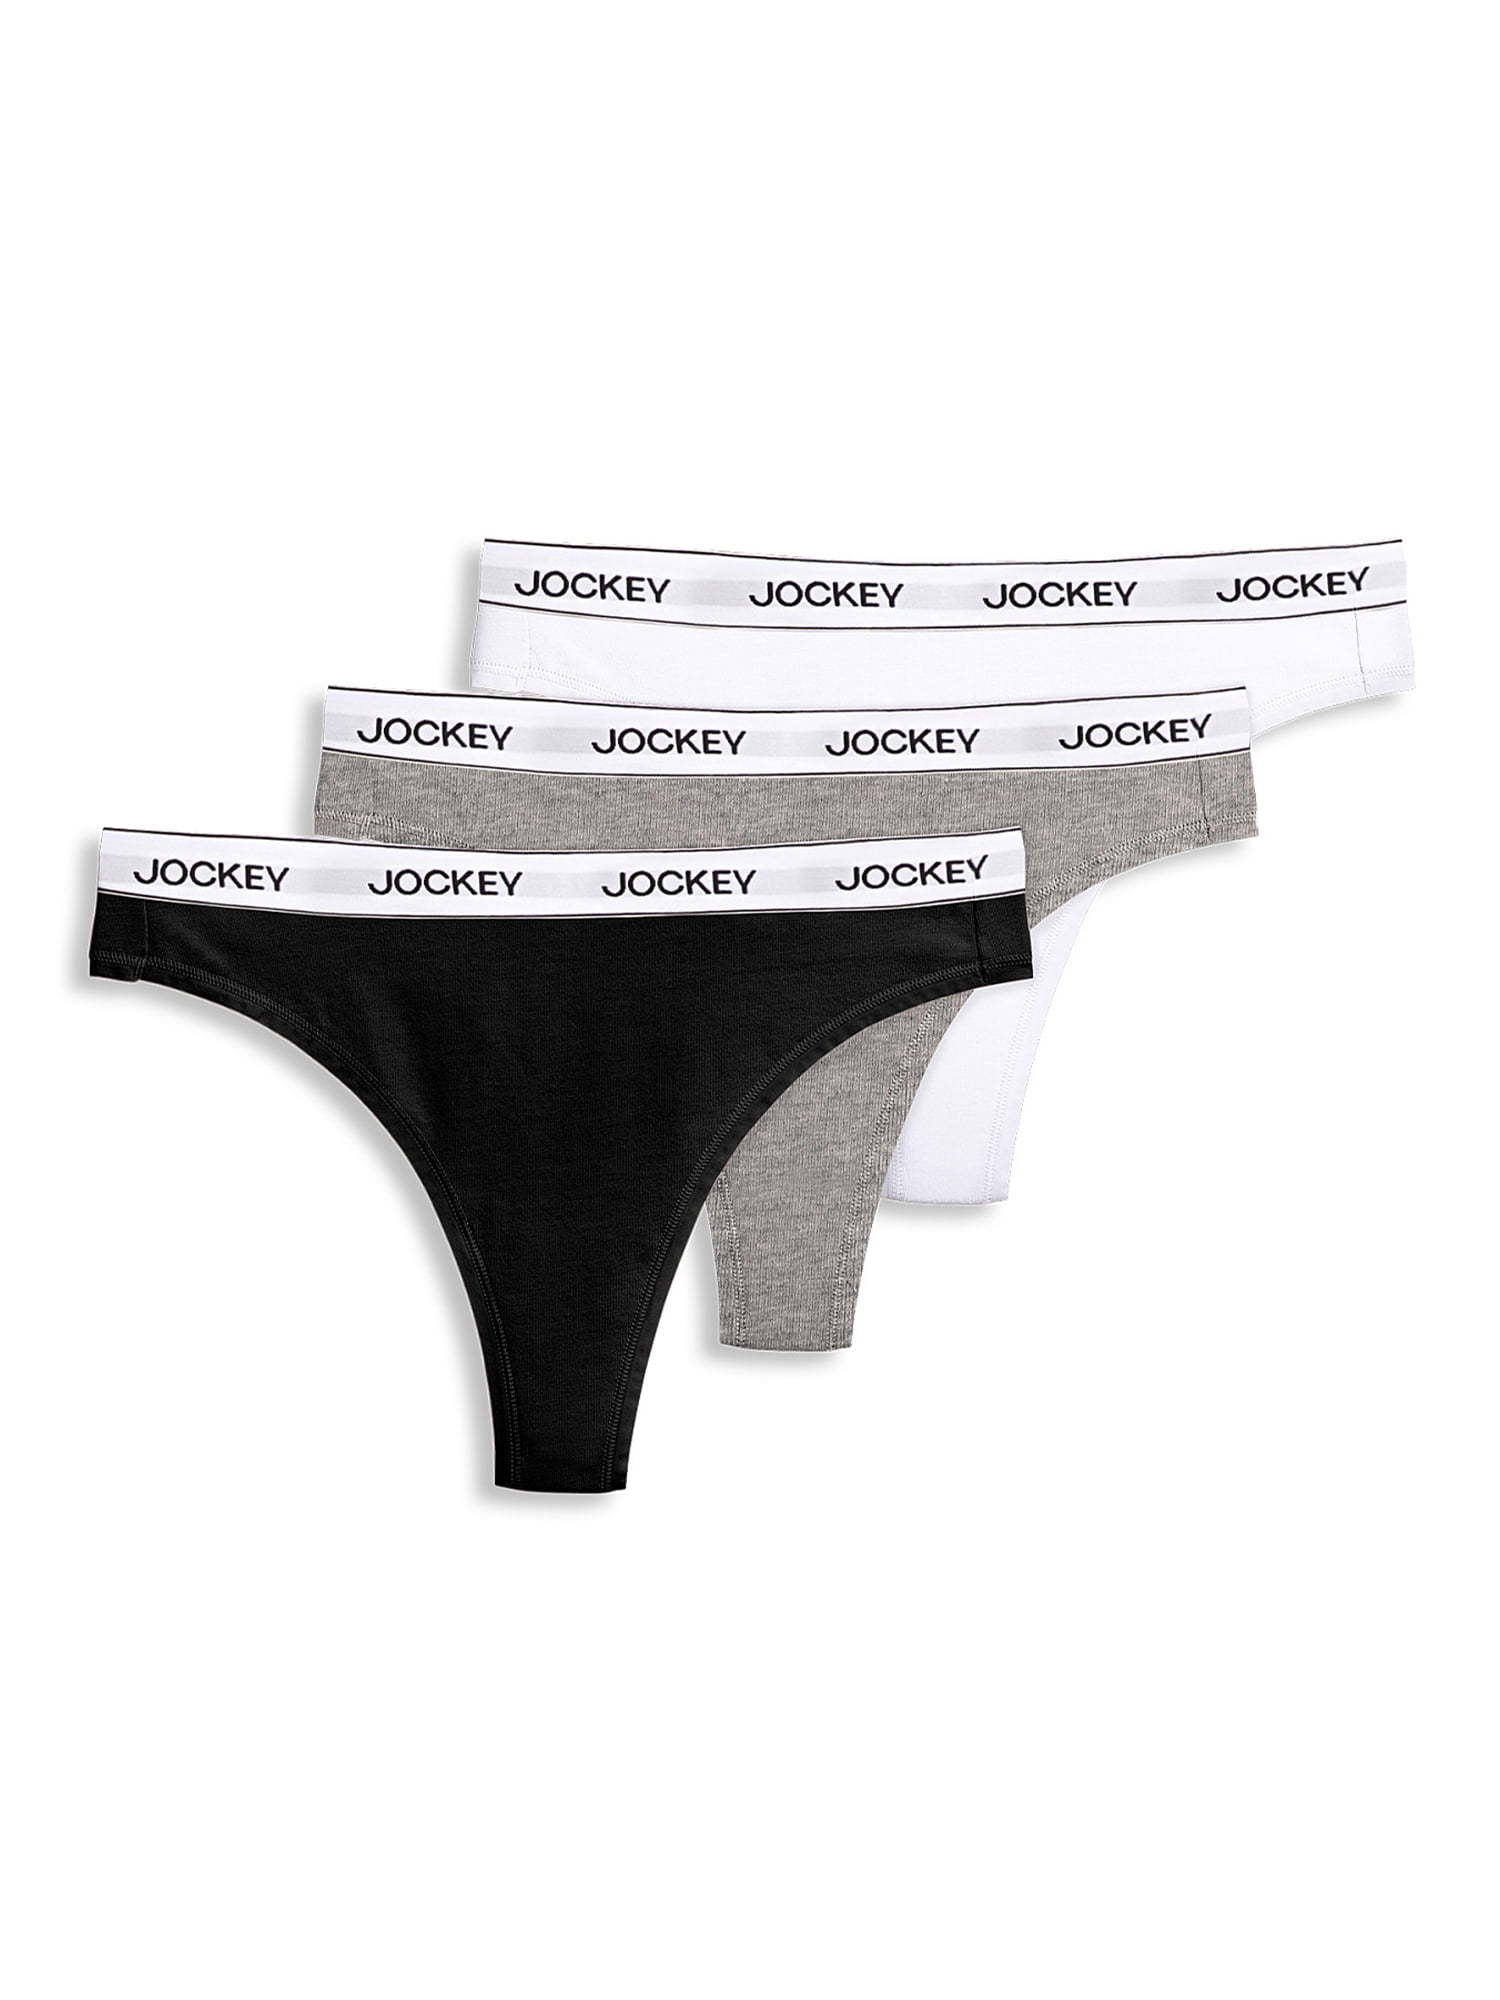 Jockey® Essentials Women's Cotton Stretch Thong Panties, 3 Pack, Sizes S-3XL